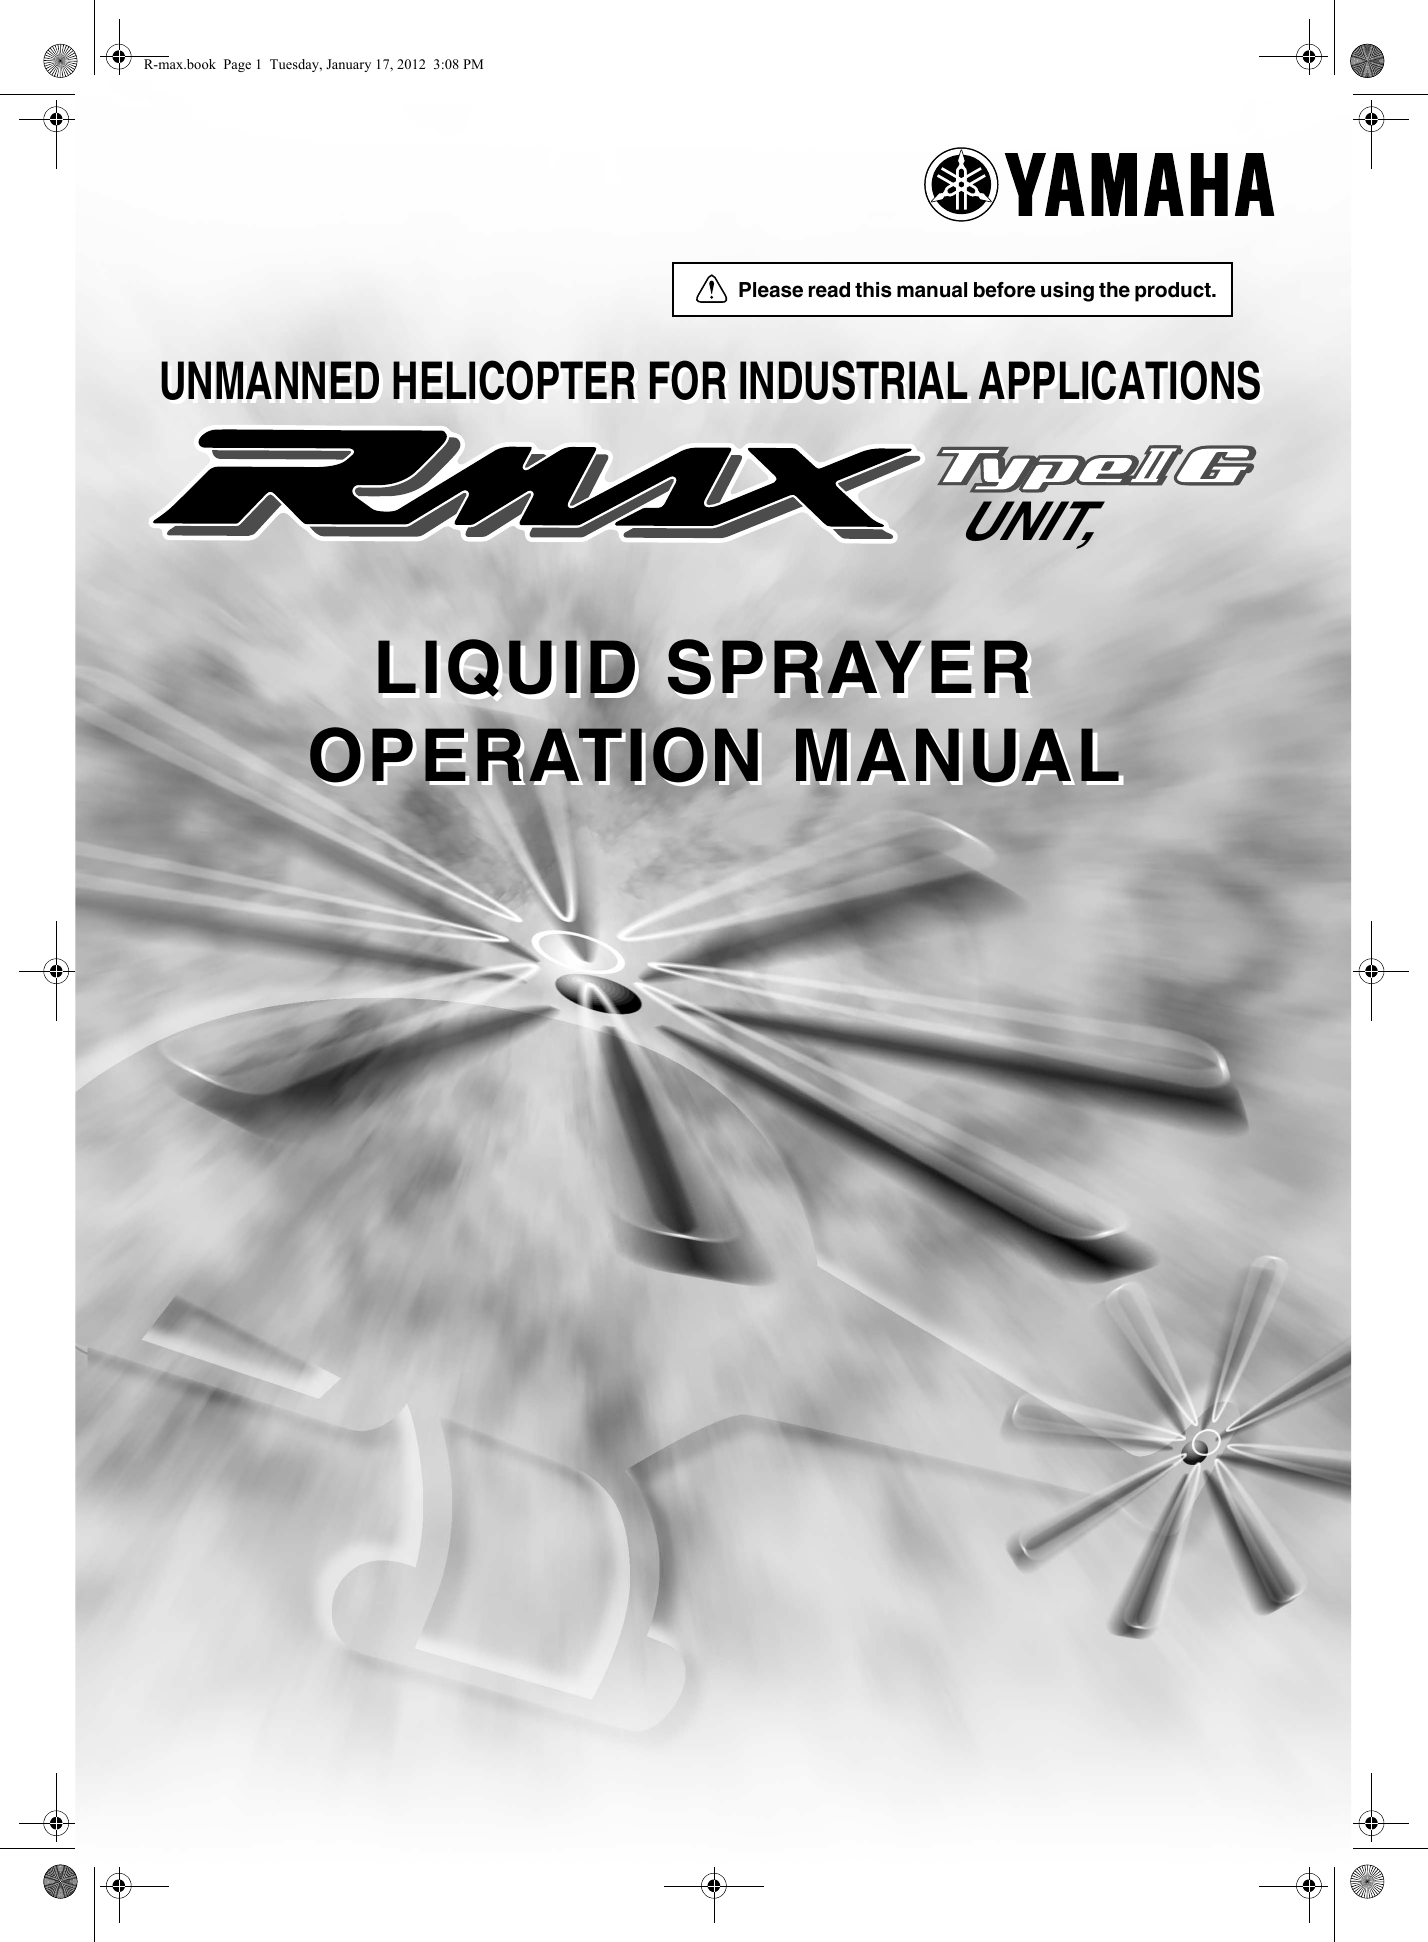 Please read this manual before using the product.UNIT, LIQUID SPRAYER OPERATION MANUALLIQUID SPRAYER OPERATION MANUALUNMANNED HELICOPTER FOR INDUSTRIAL APPLICATIONSUNMANNED HELICOPTER FOR INDUSTRIAL APPLICATIONSR-max.book  Page 1  Tuesday, January 17, 2012  3:08 PM